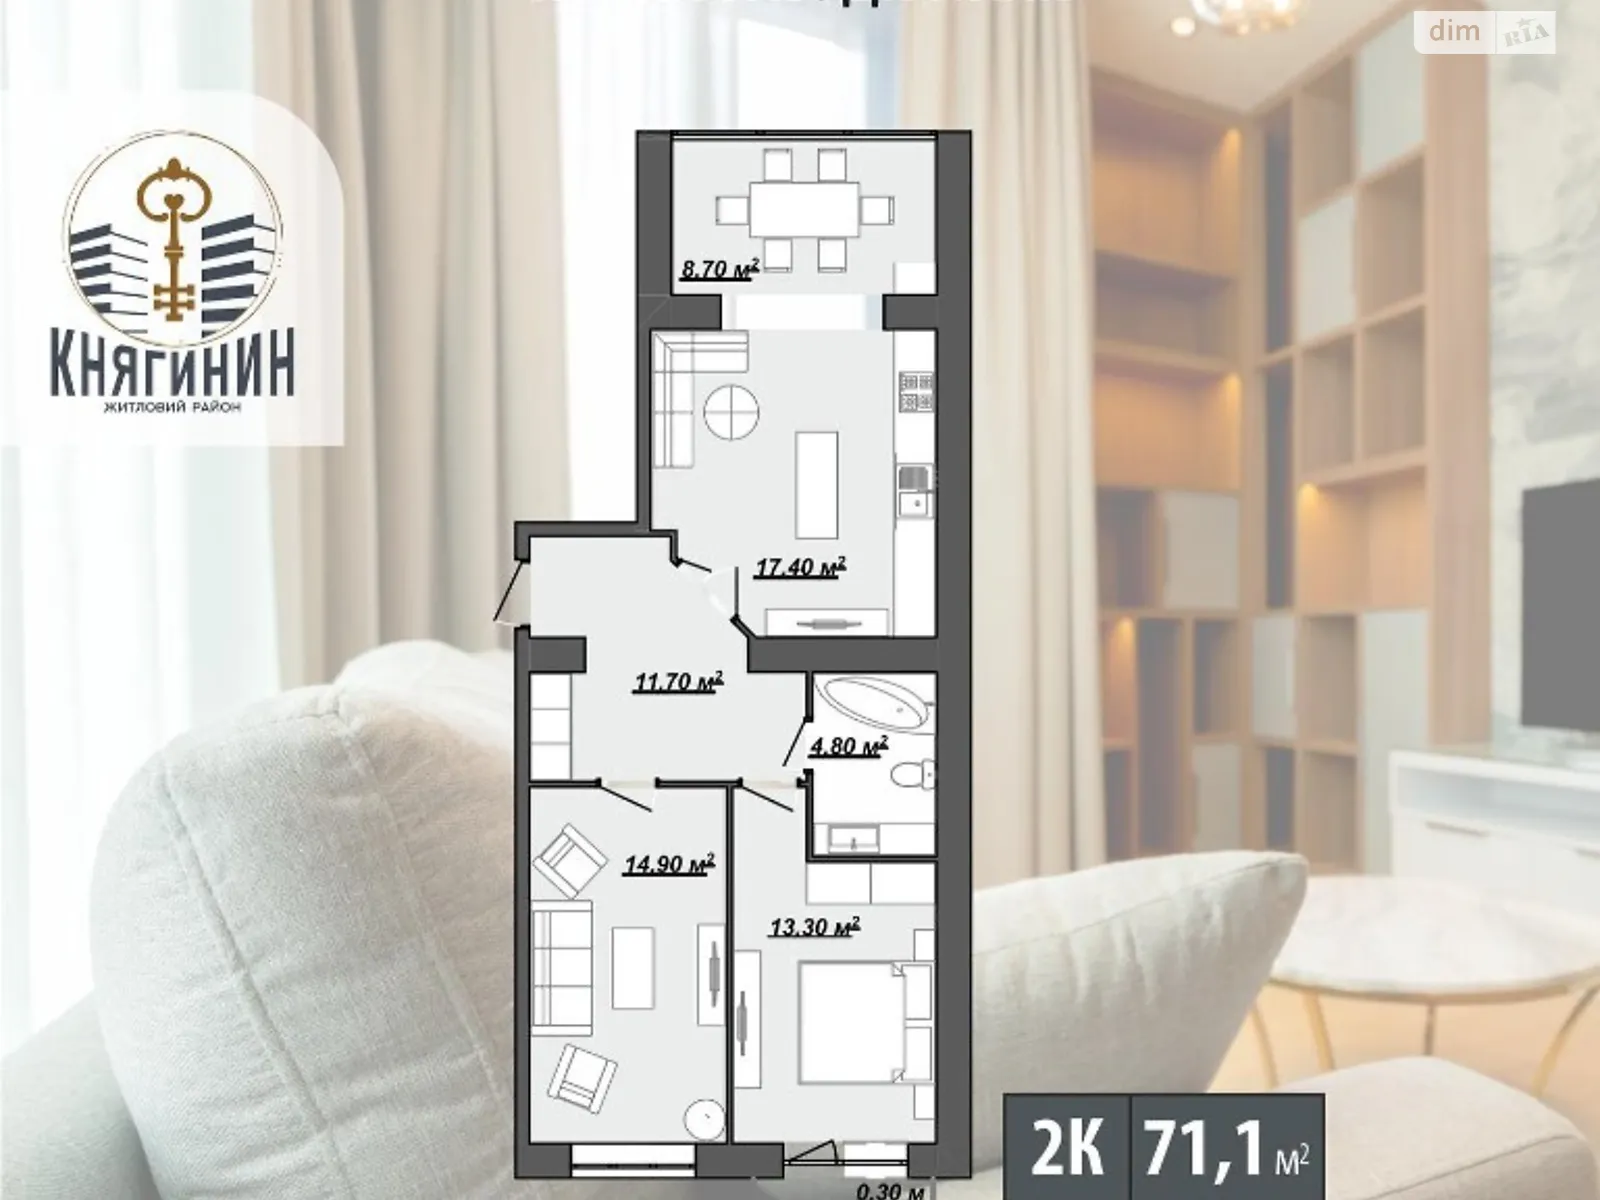 Продается 2-комнатная квартира 71.1 кв. м в Ивано-Франковске, ул. Княгинин, 44 - фото 1